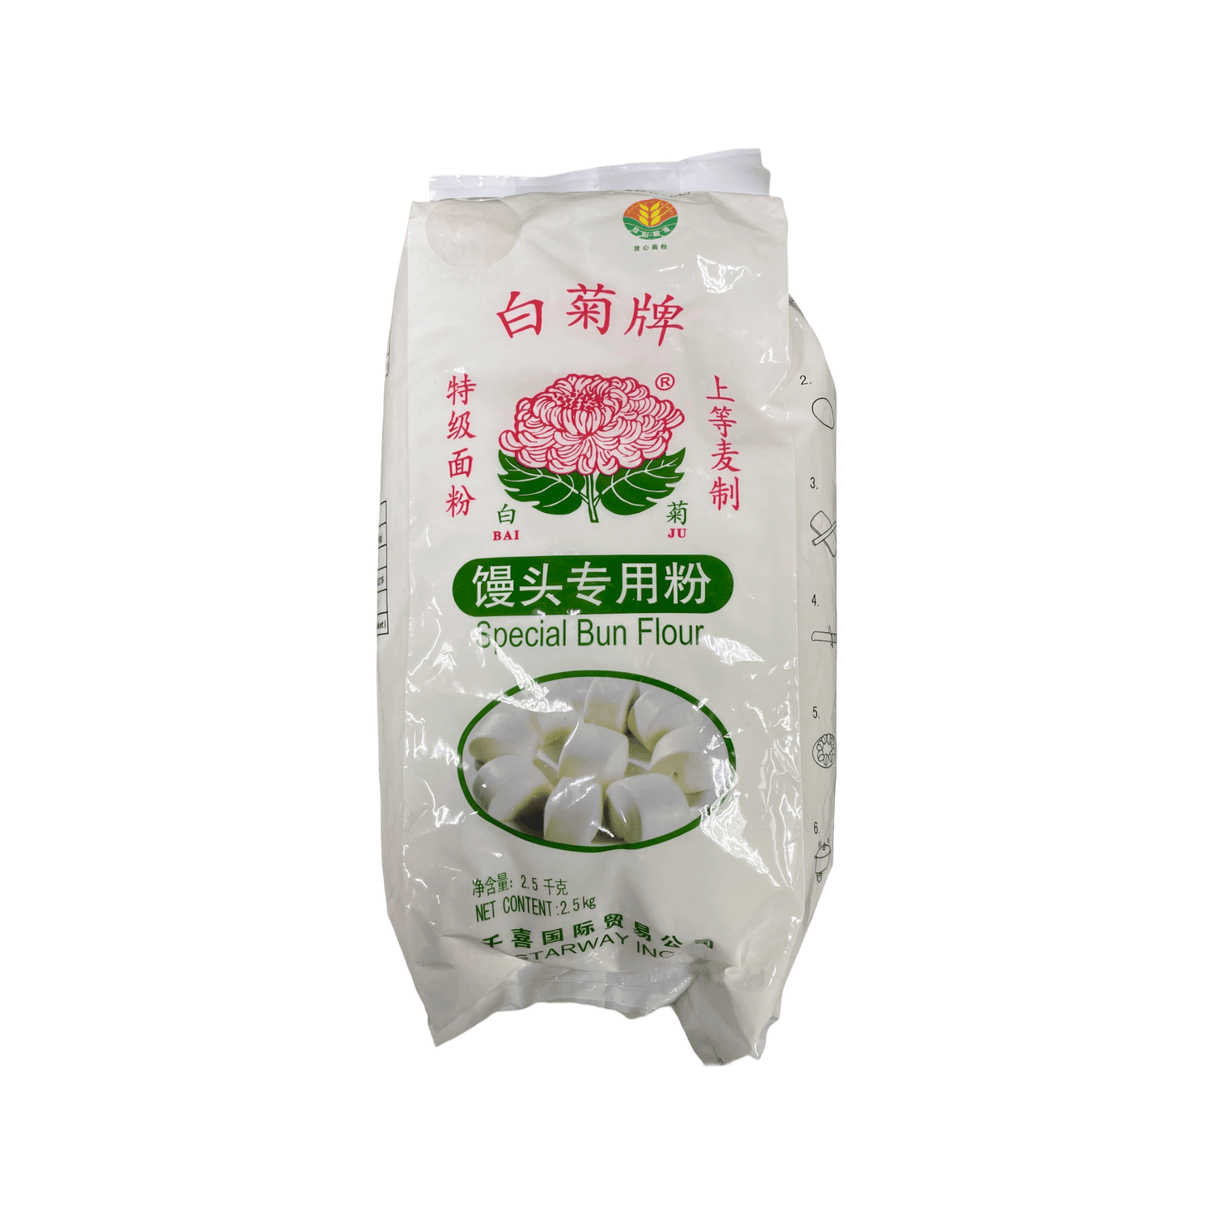 Bai Ju Special Bun Flour